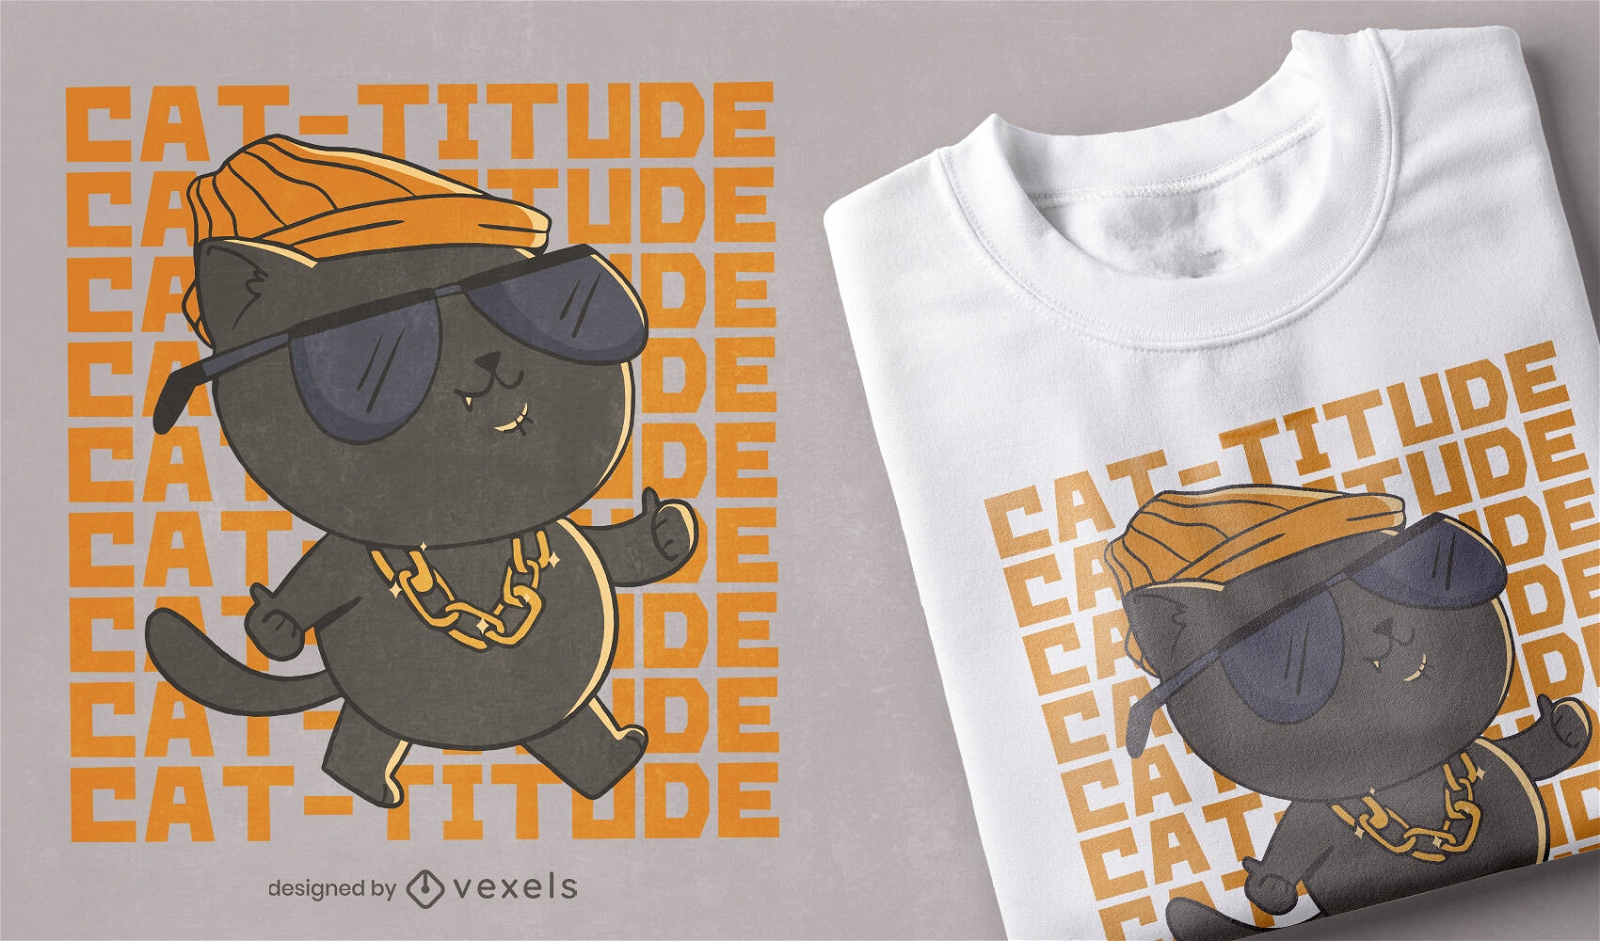 Cat-titude cat t-shirt design